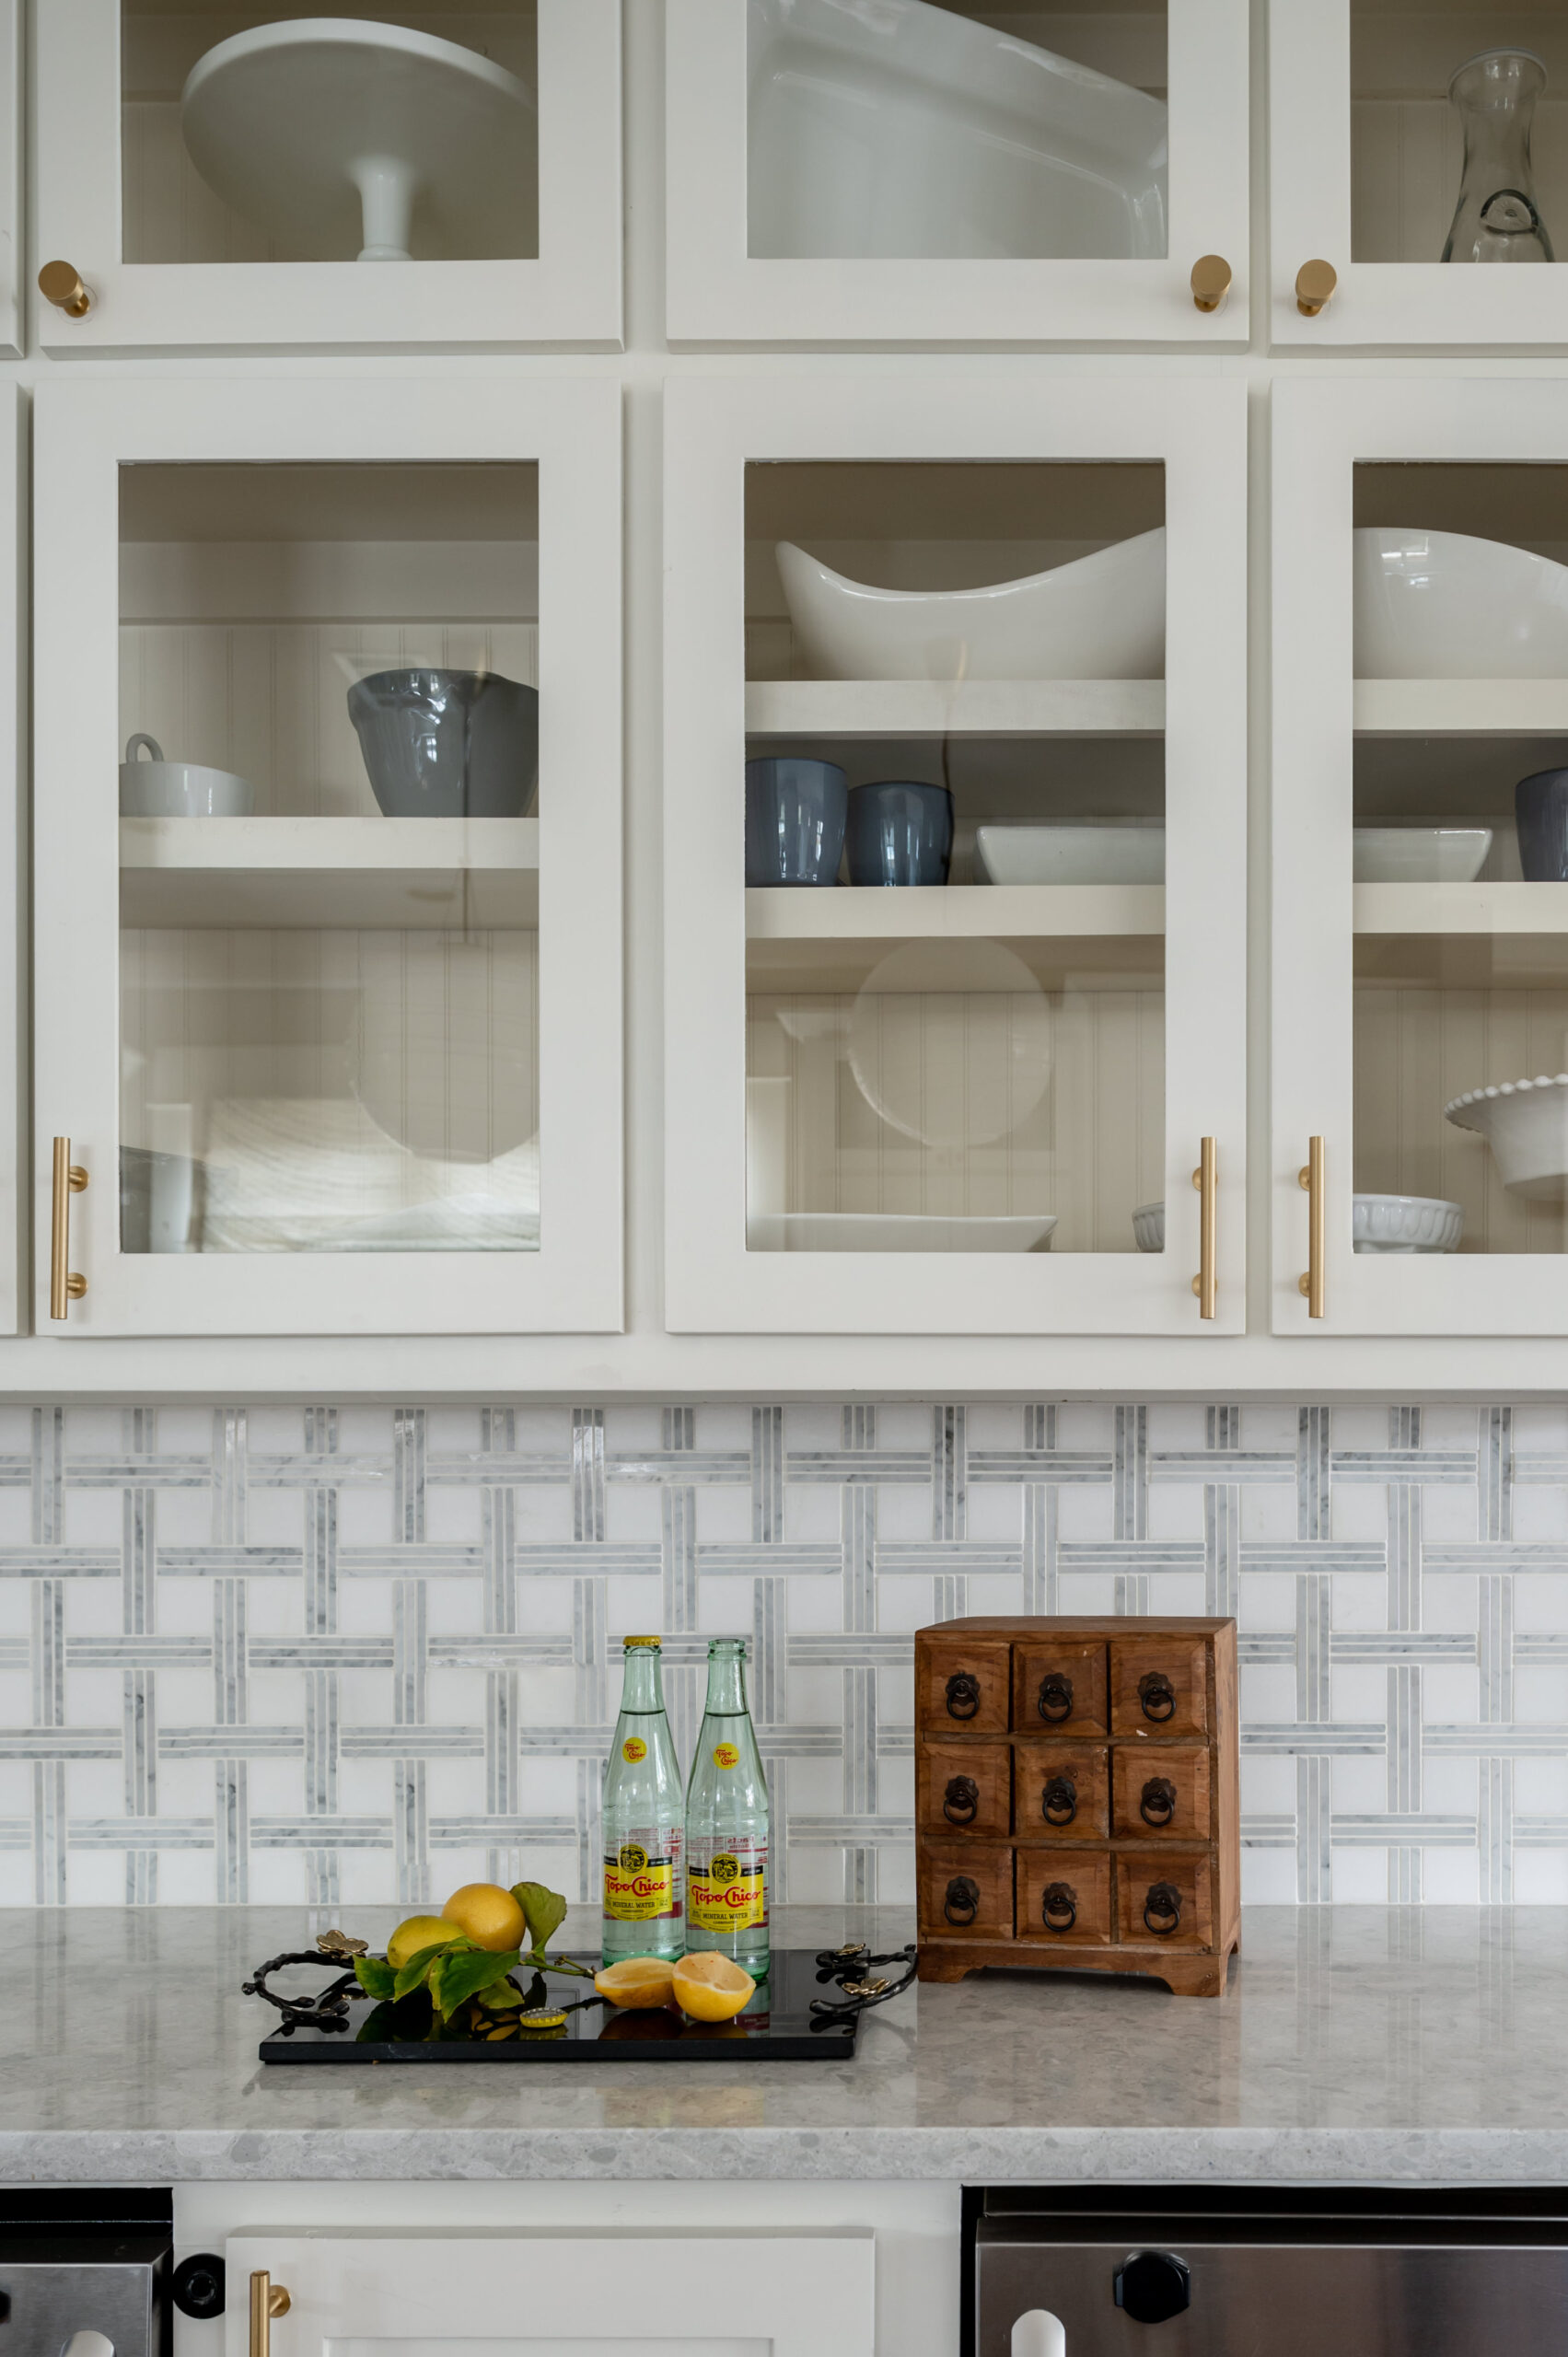 Luxury kitchen interior design with tiled backspalsh